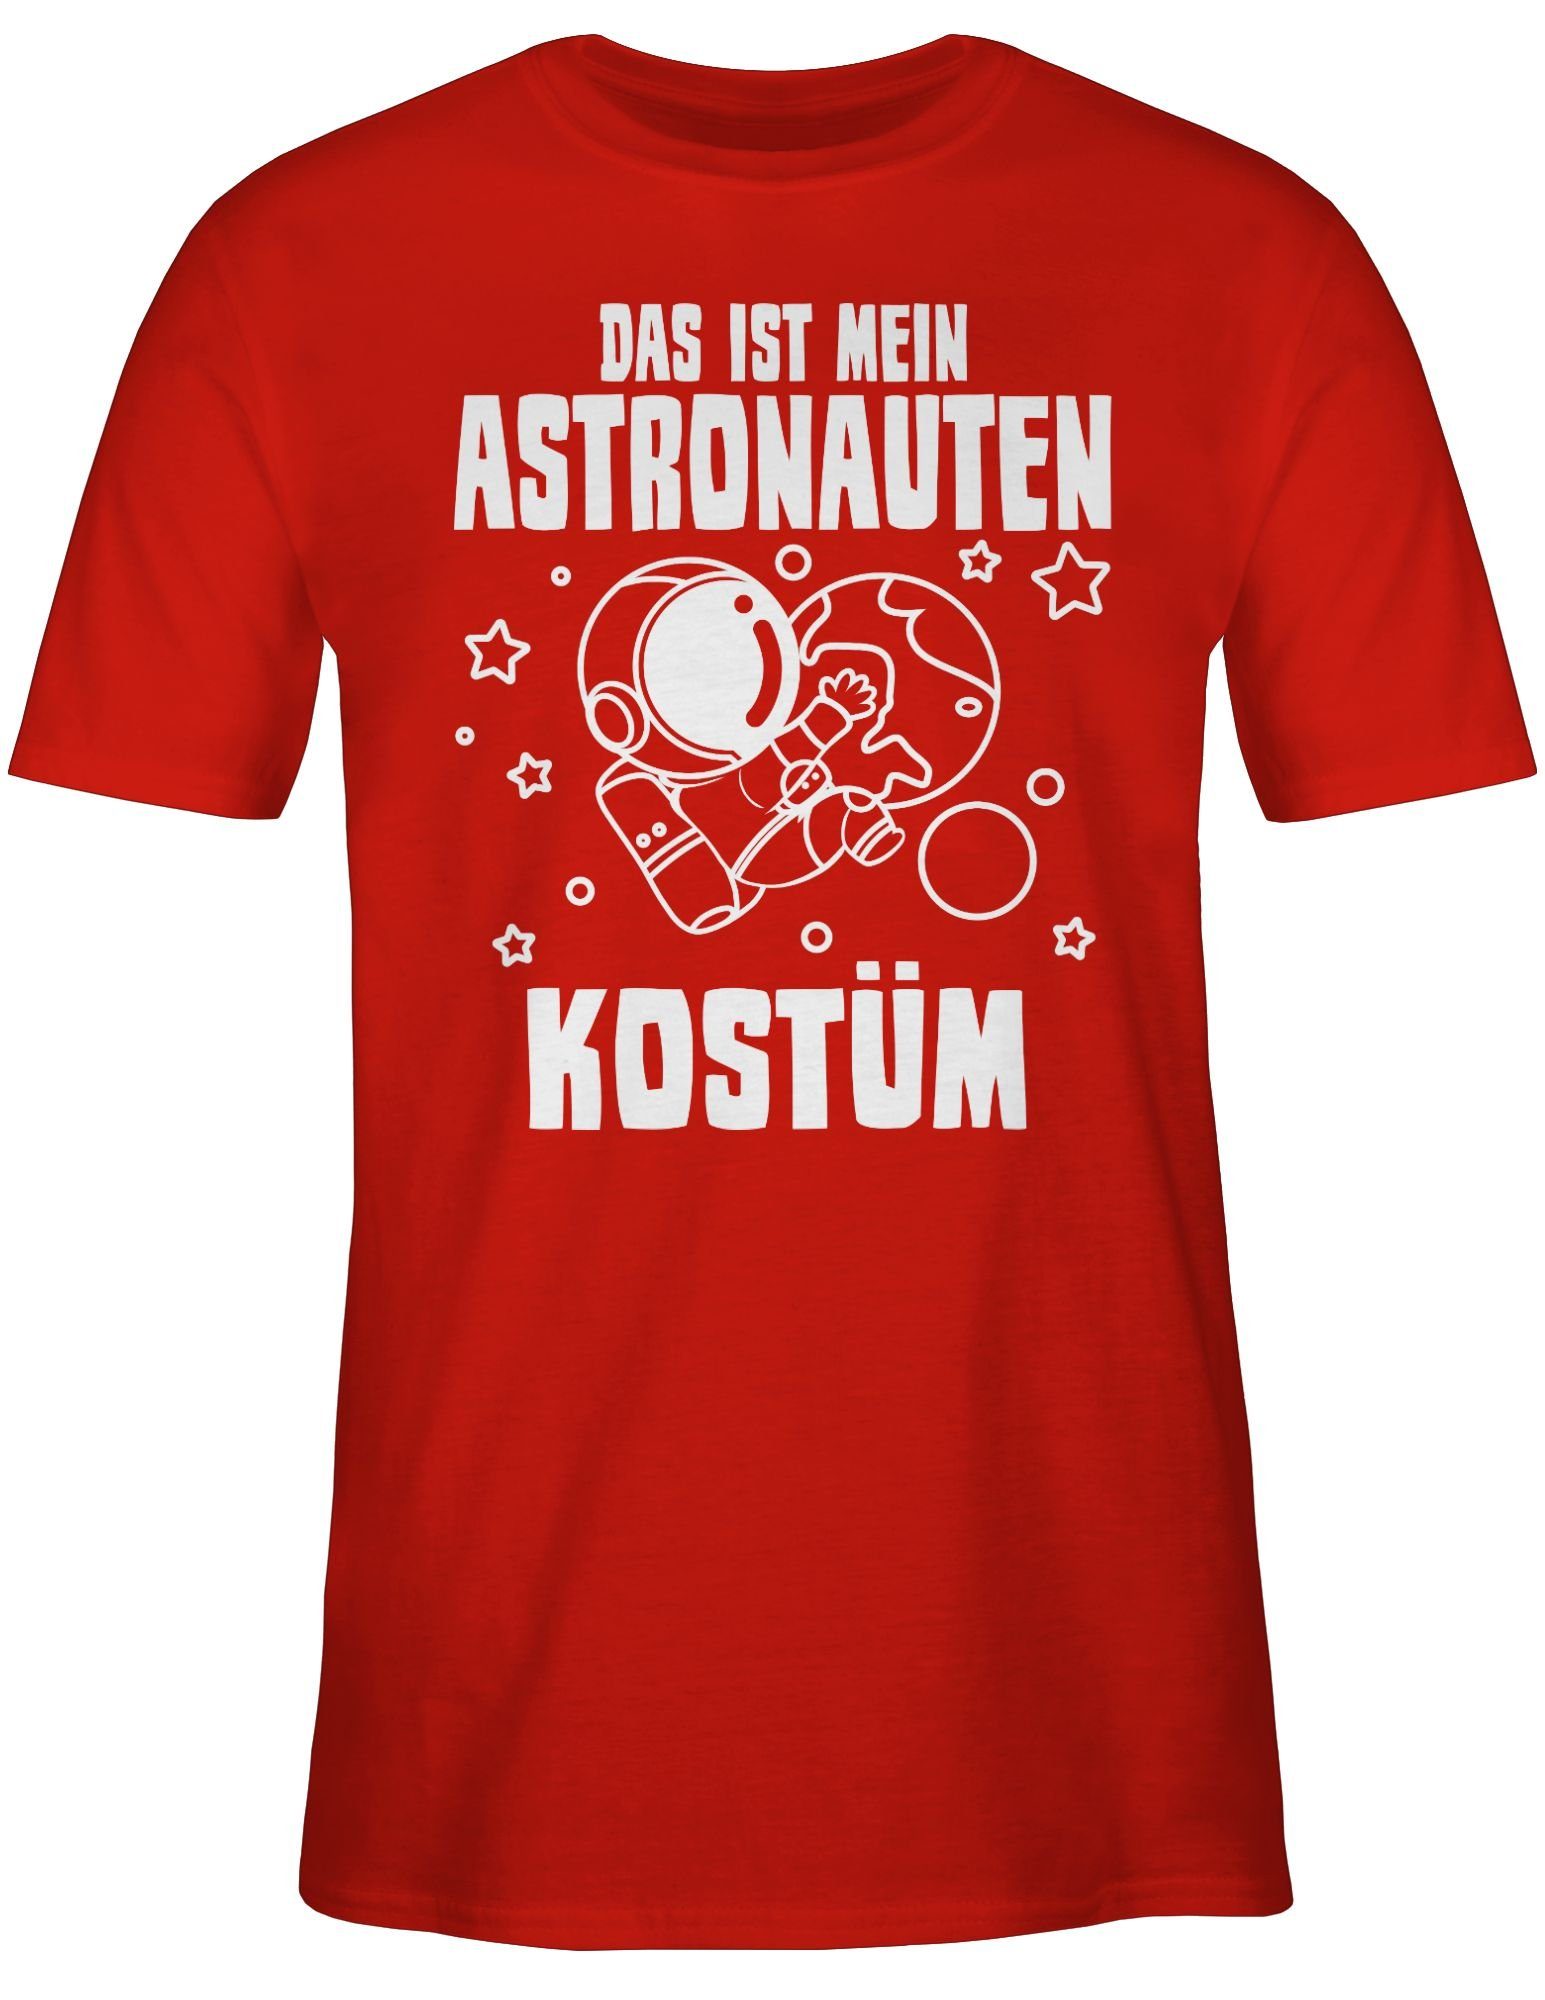 Karneval Rot Astronautenkostüm ist - Shirtracer Weltraum Astronaut Das 3 Outfit mein Astronauten Kostüm T-Shirt